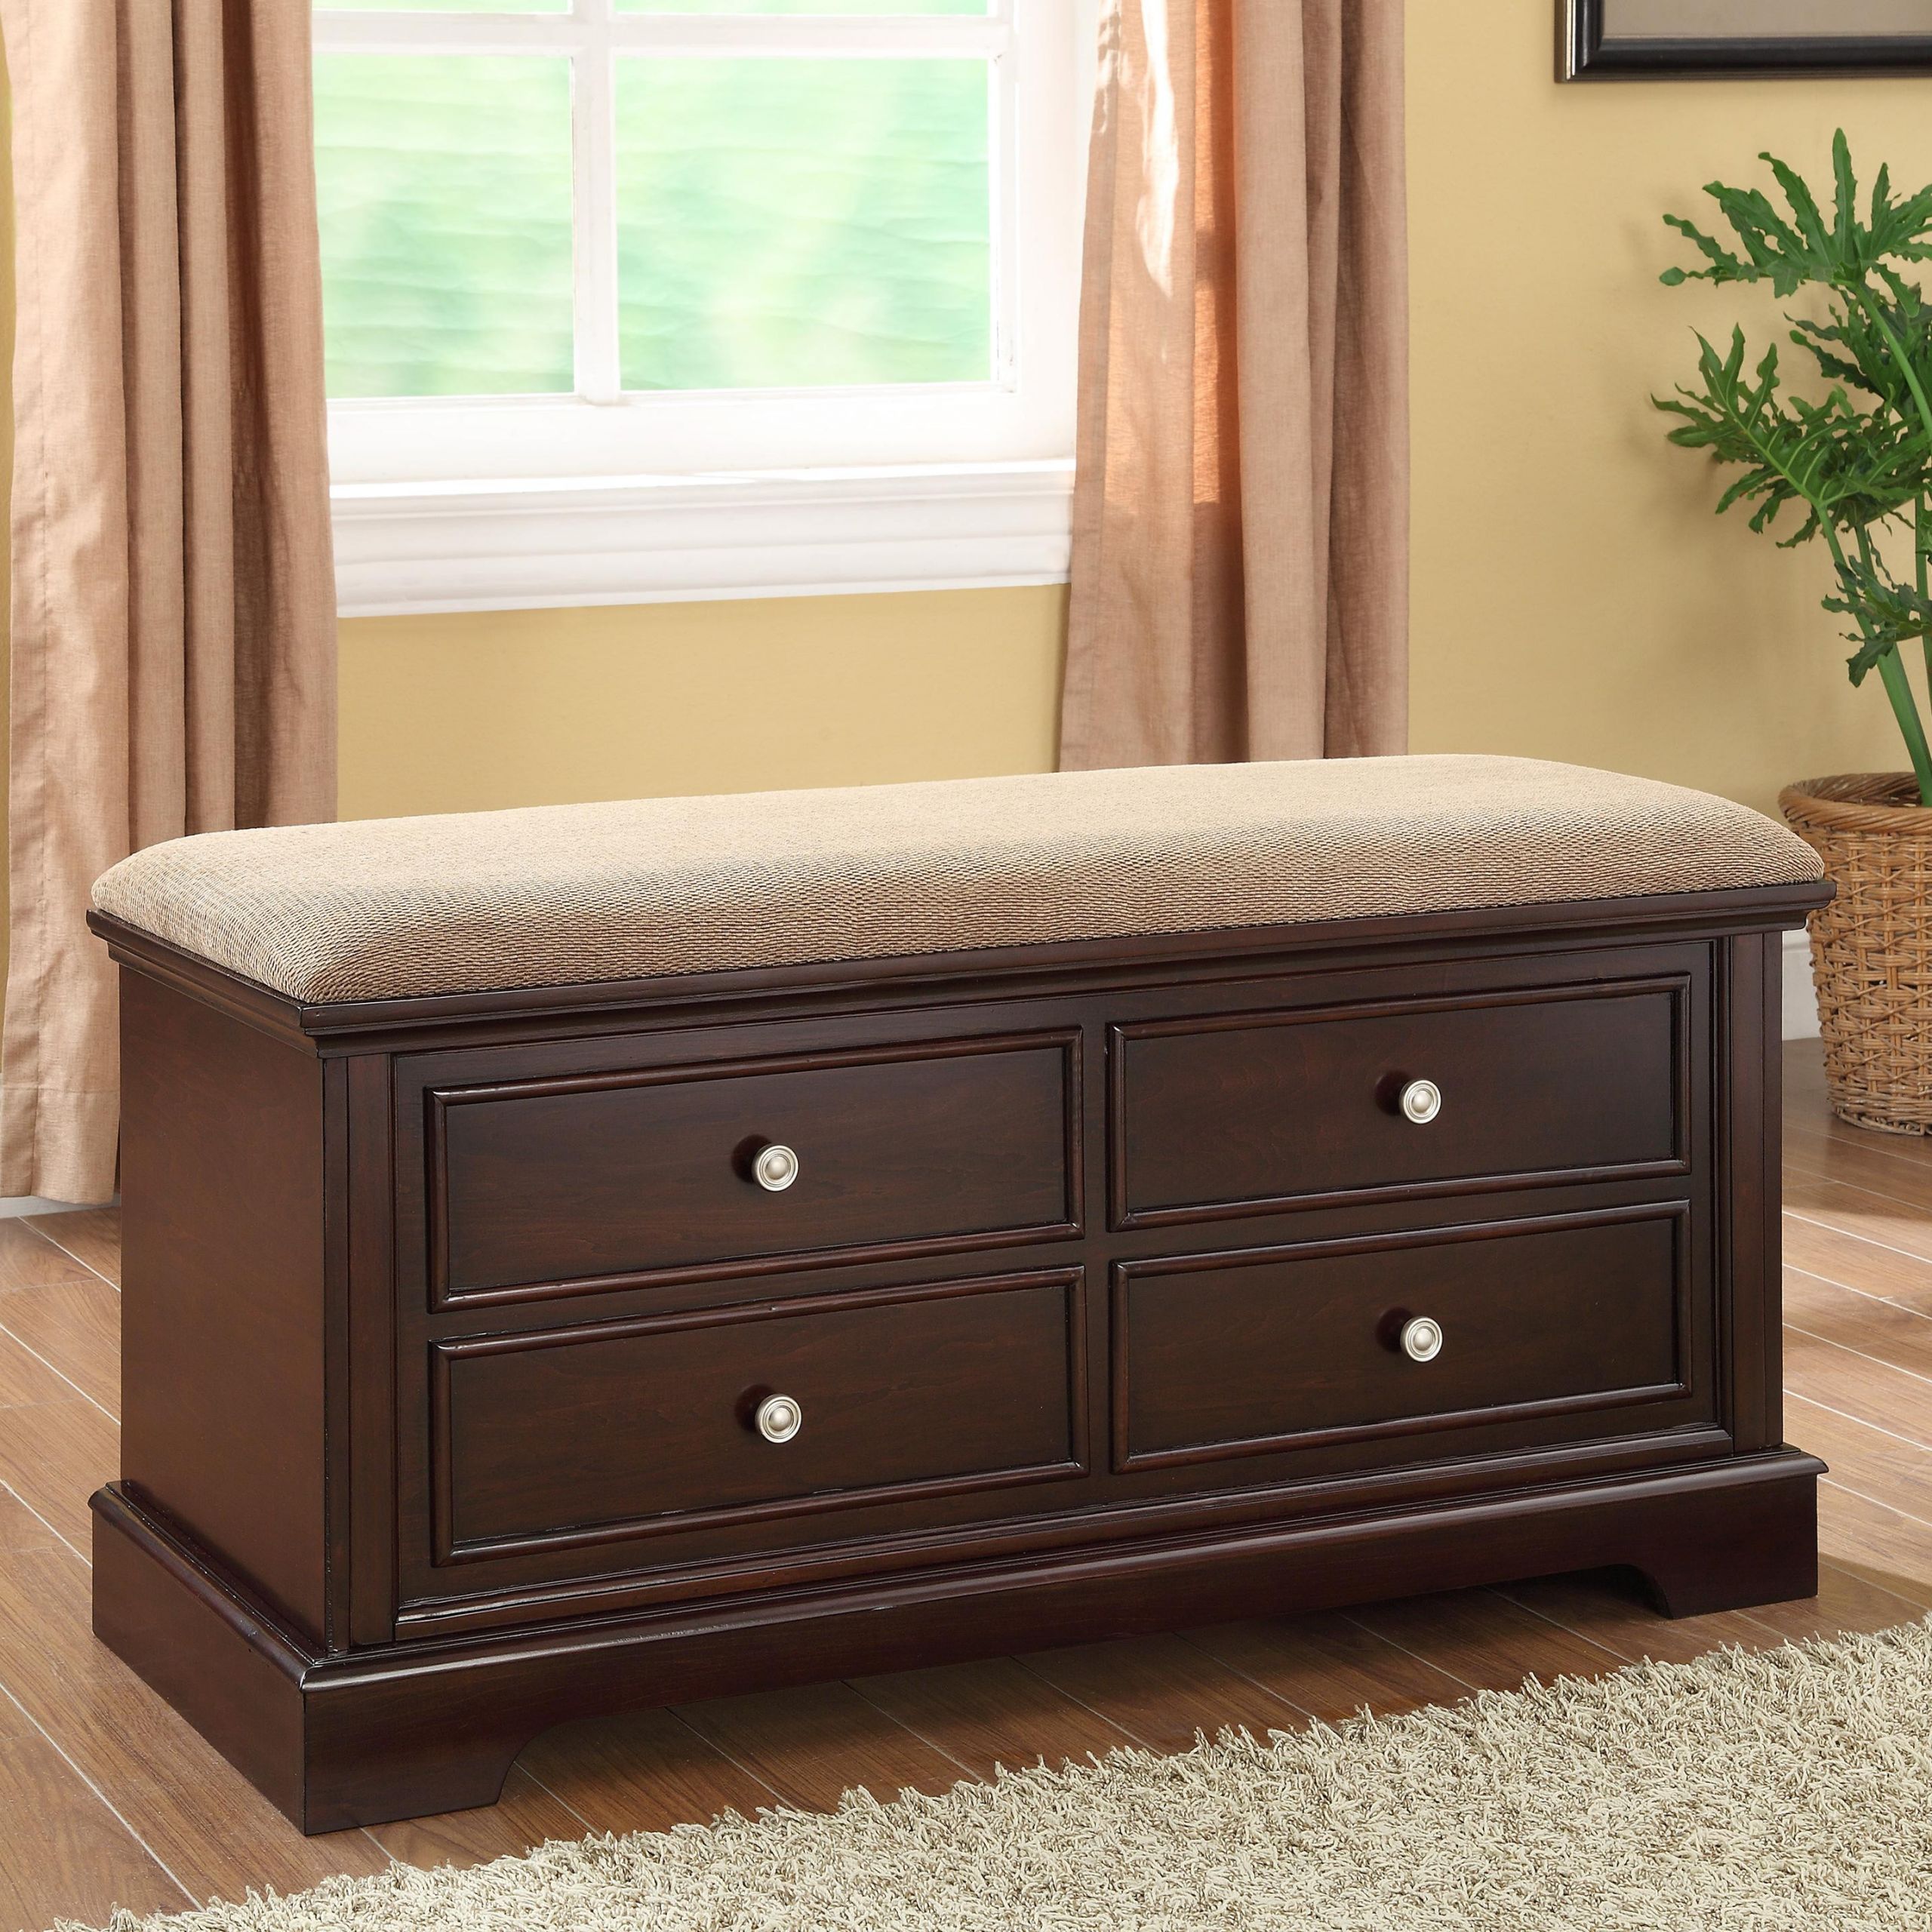 Bedroom Storage Chest Bench
 Crown Mark Cedar Chest 4925 Upholstered Cedar Accent Bench